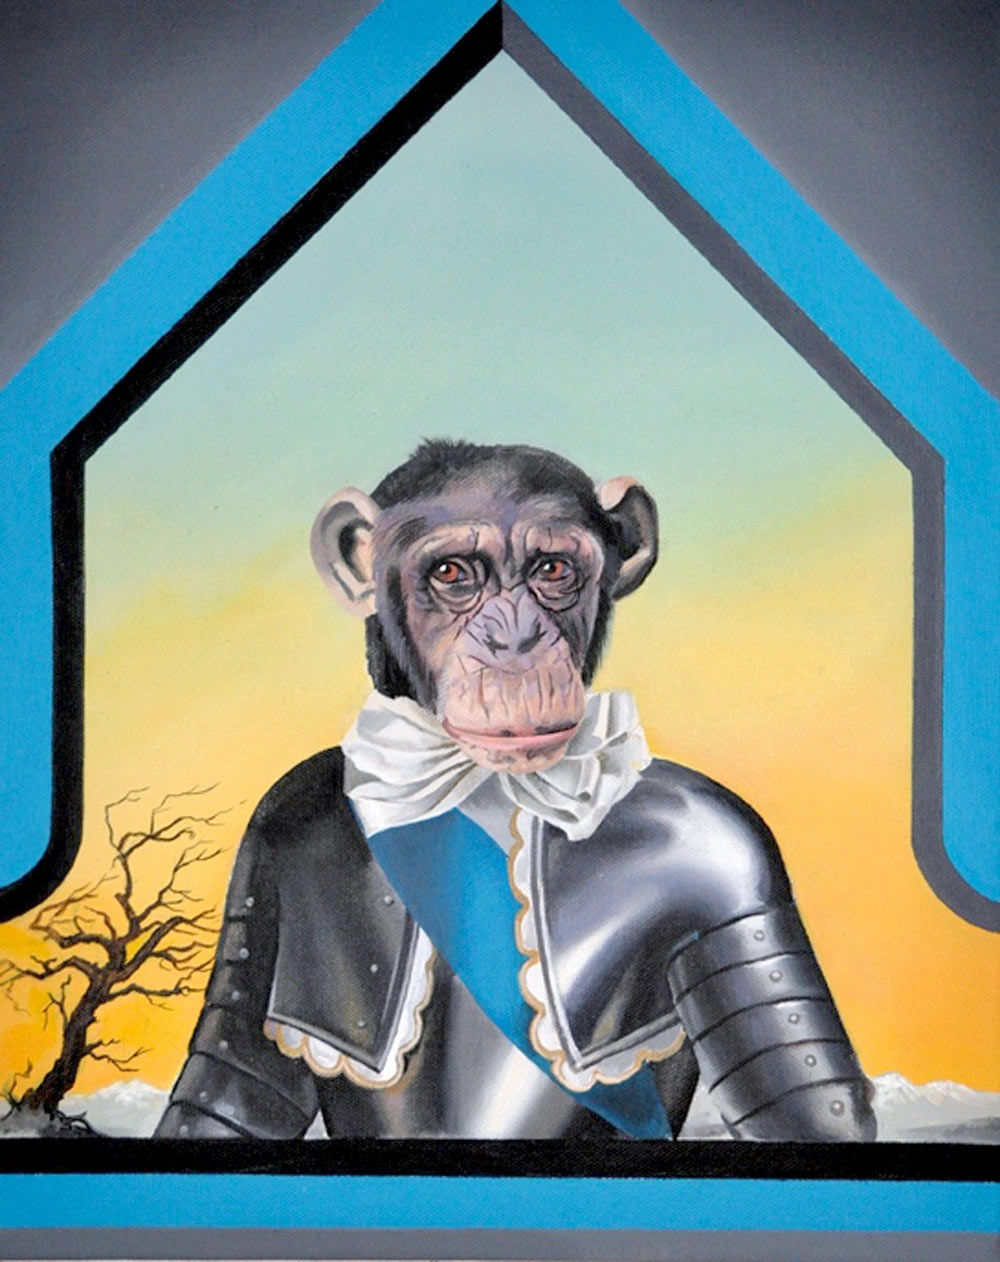 Lord Chimp